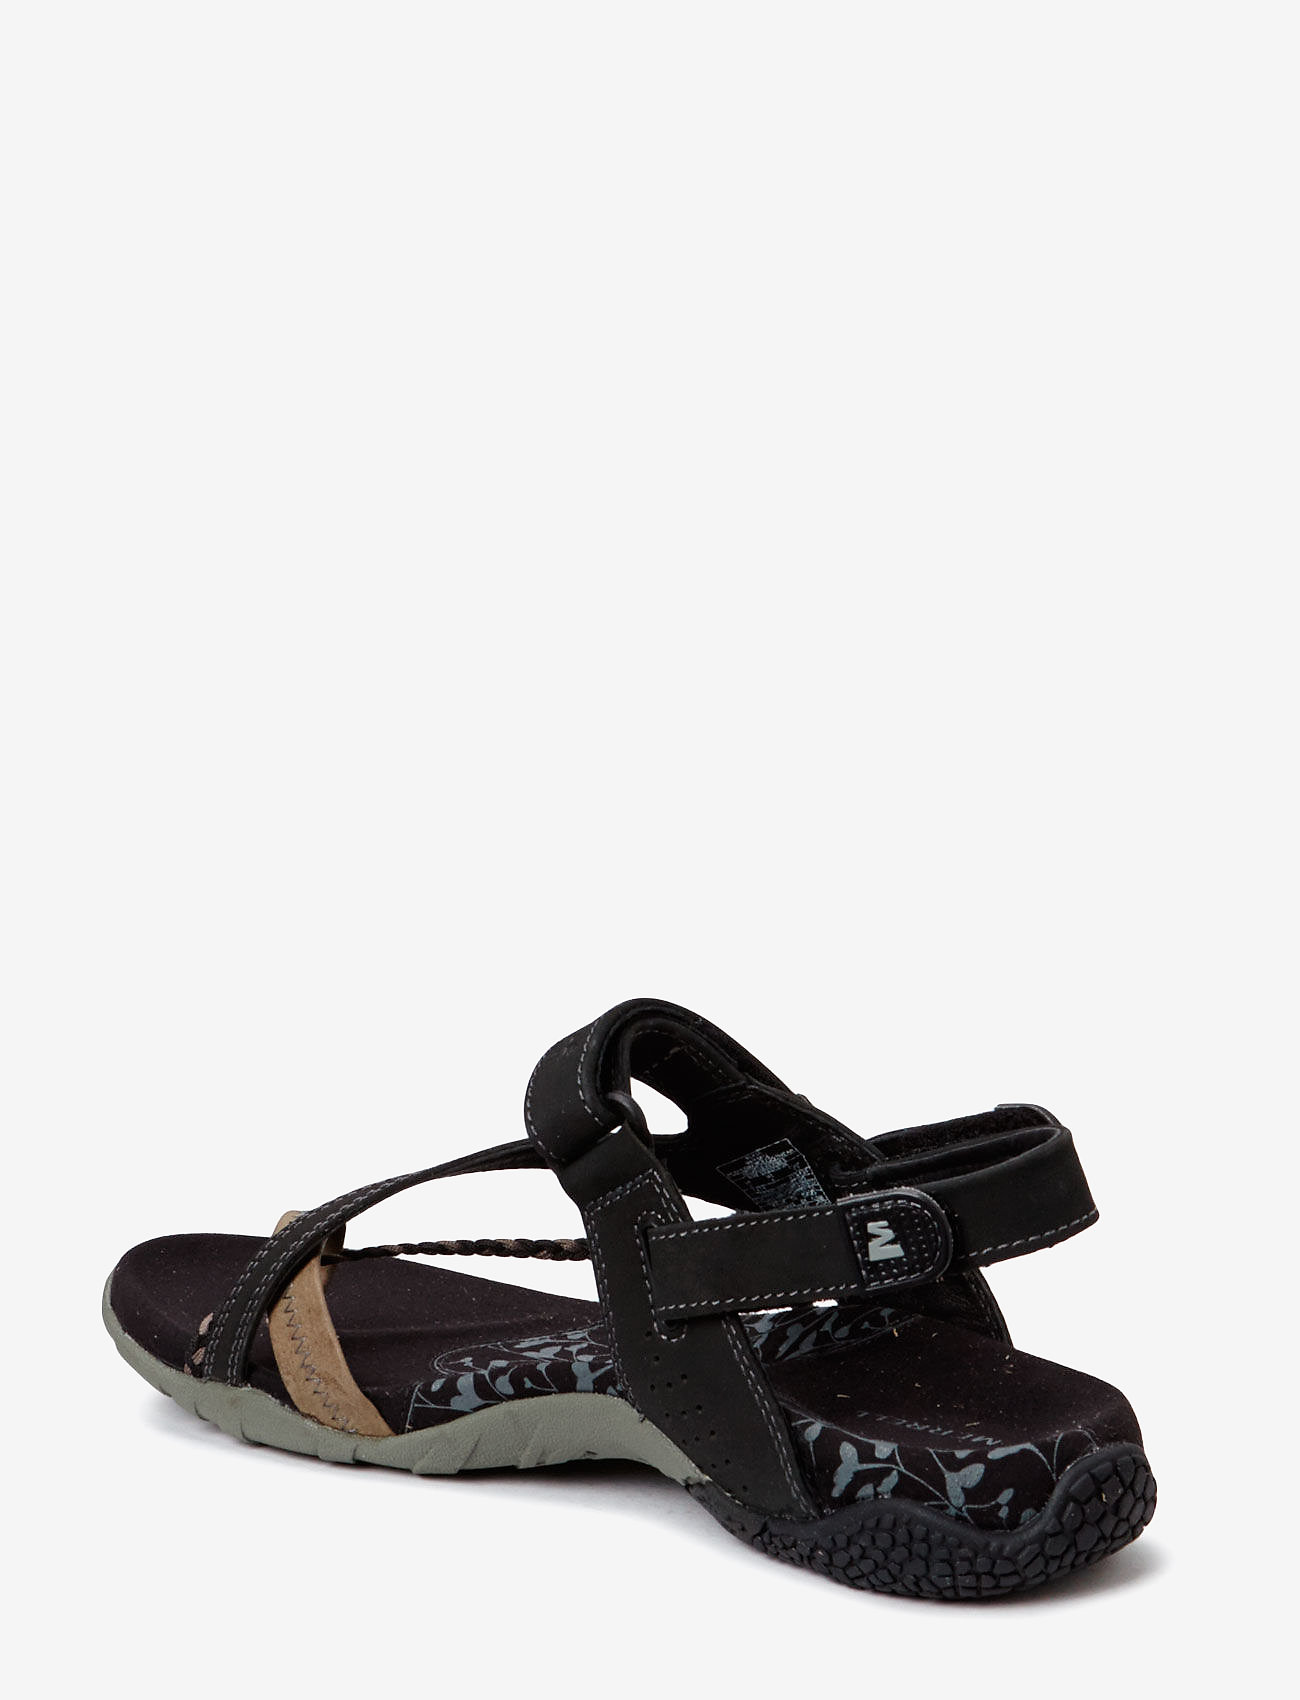 Merrell - Women's Siena - Black - hiking sandals - black - 1